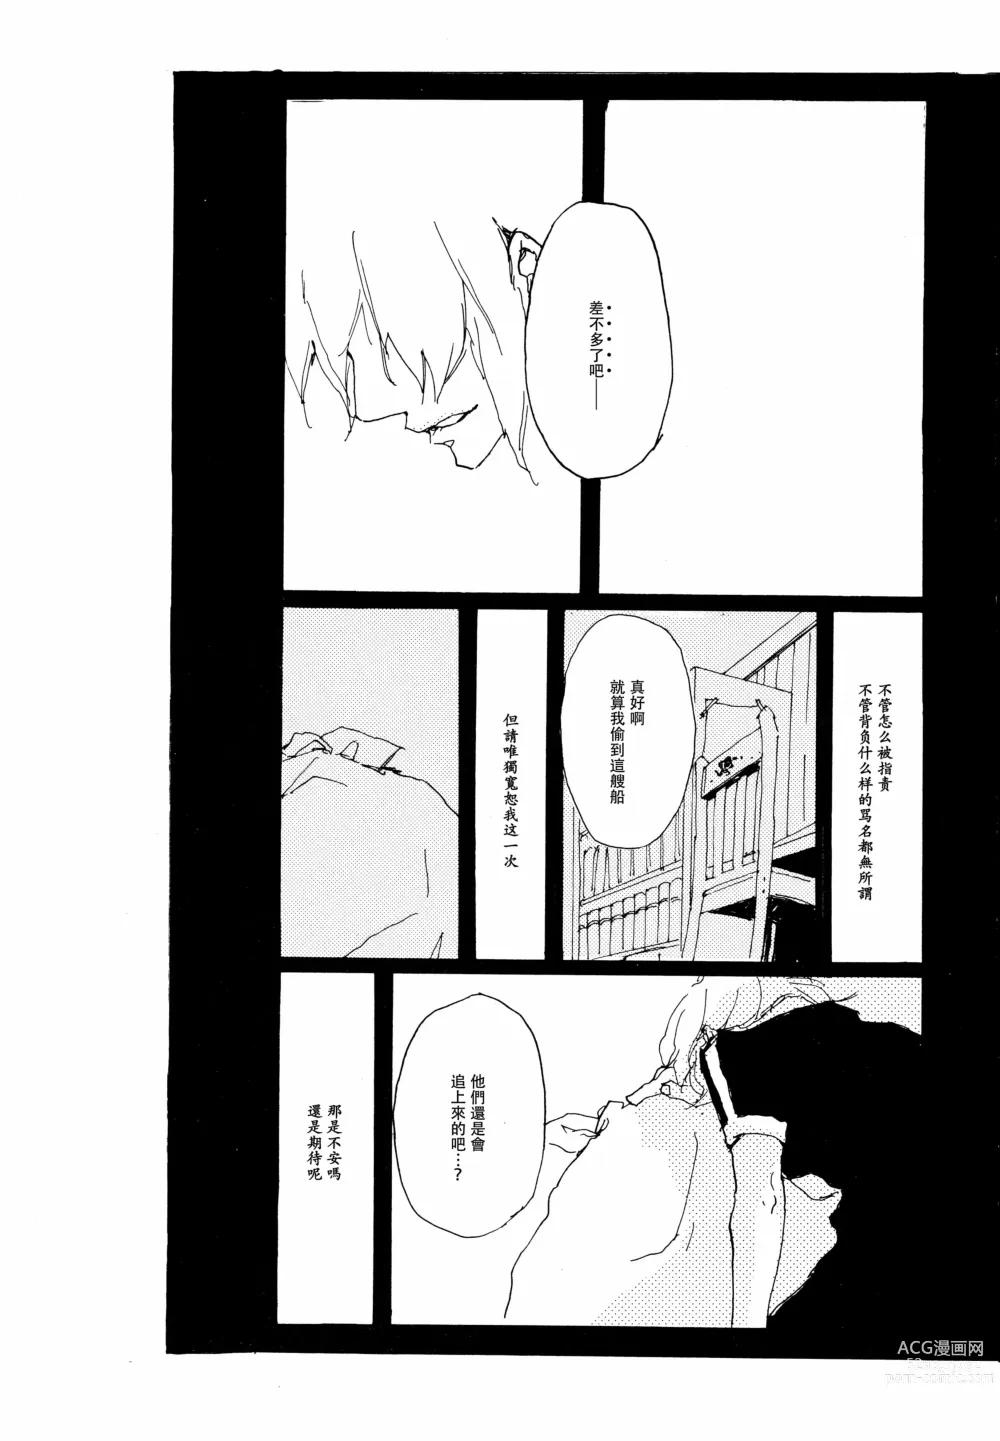 Page 2 of doujinshi 忧郁·与那份没有尽头的悲伤